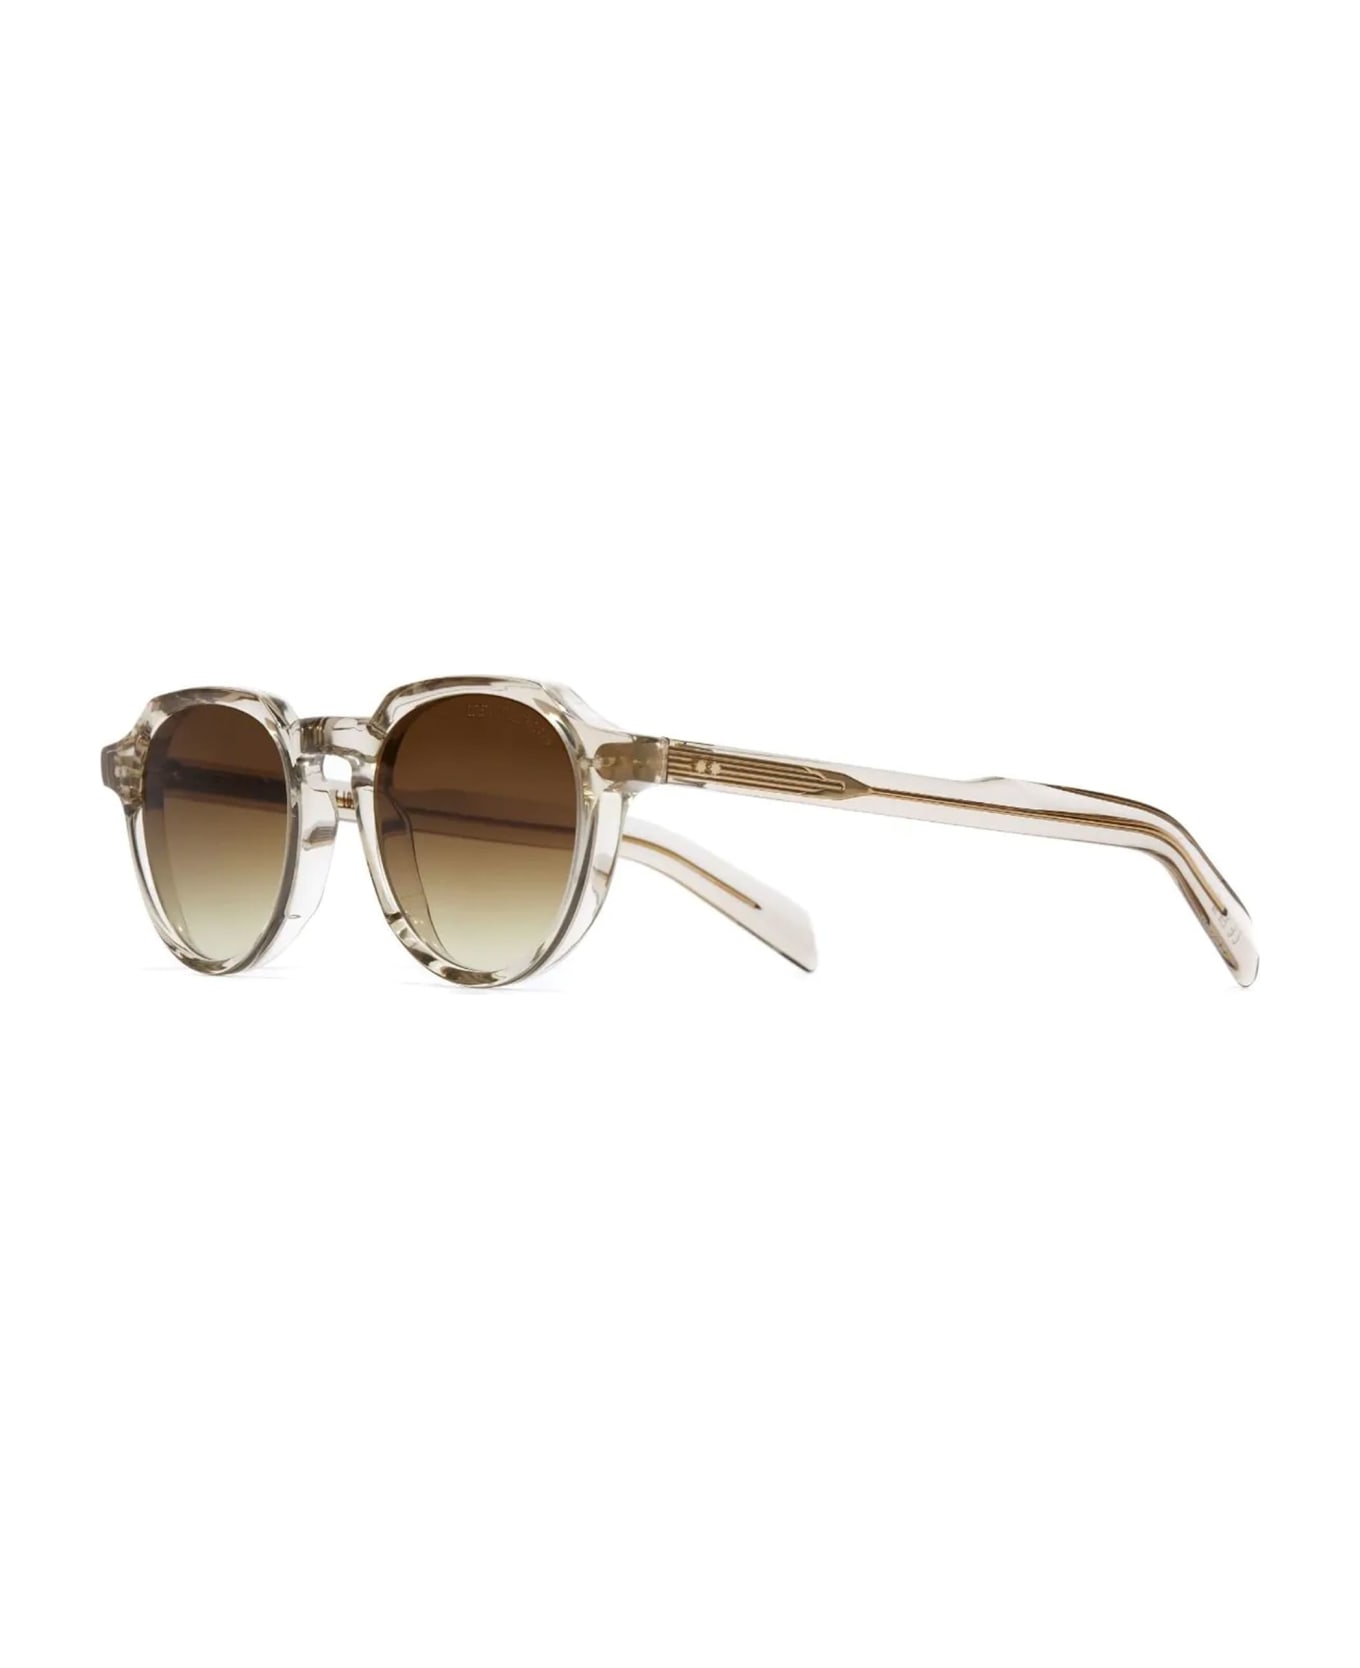 Cutler and Gross Gr06 / Sand Crystal Sunglasses - beige